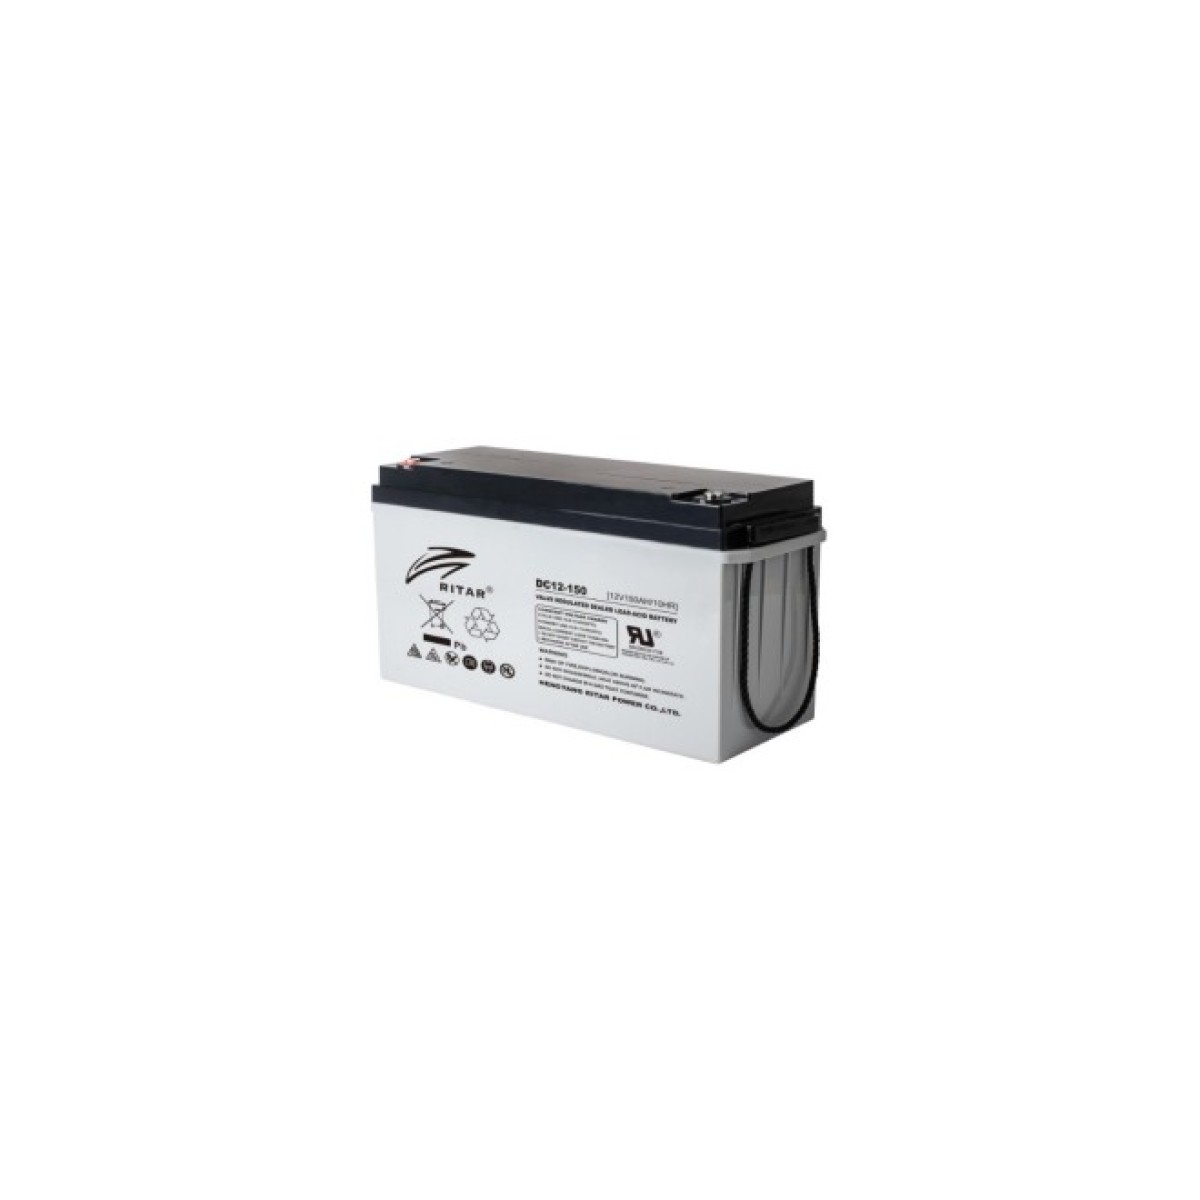 Батарея к ИБП Ritar AGM RITAR DC12-150 12V-150Ah (DC12-150) 256_256.jpg